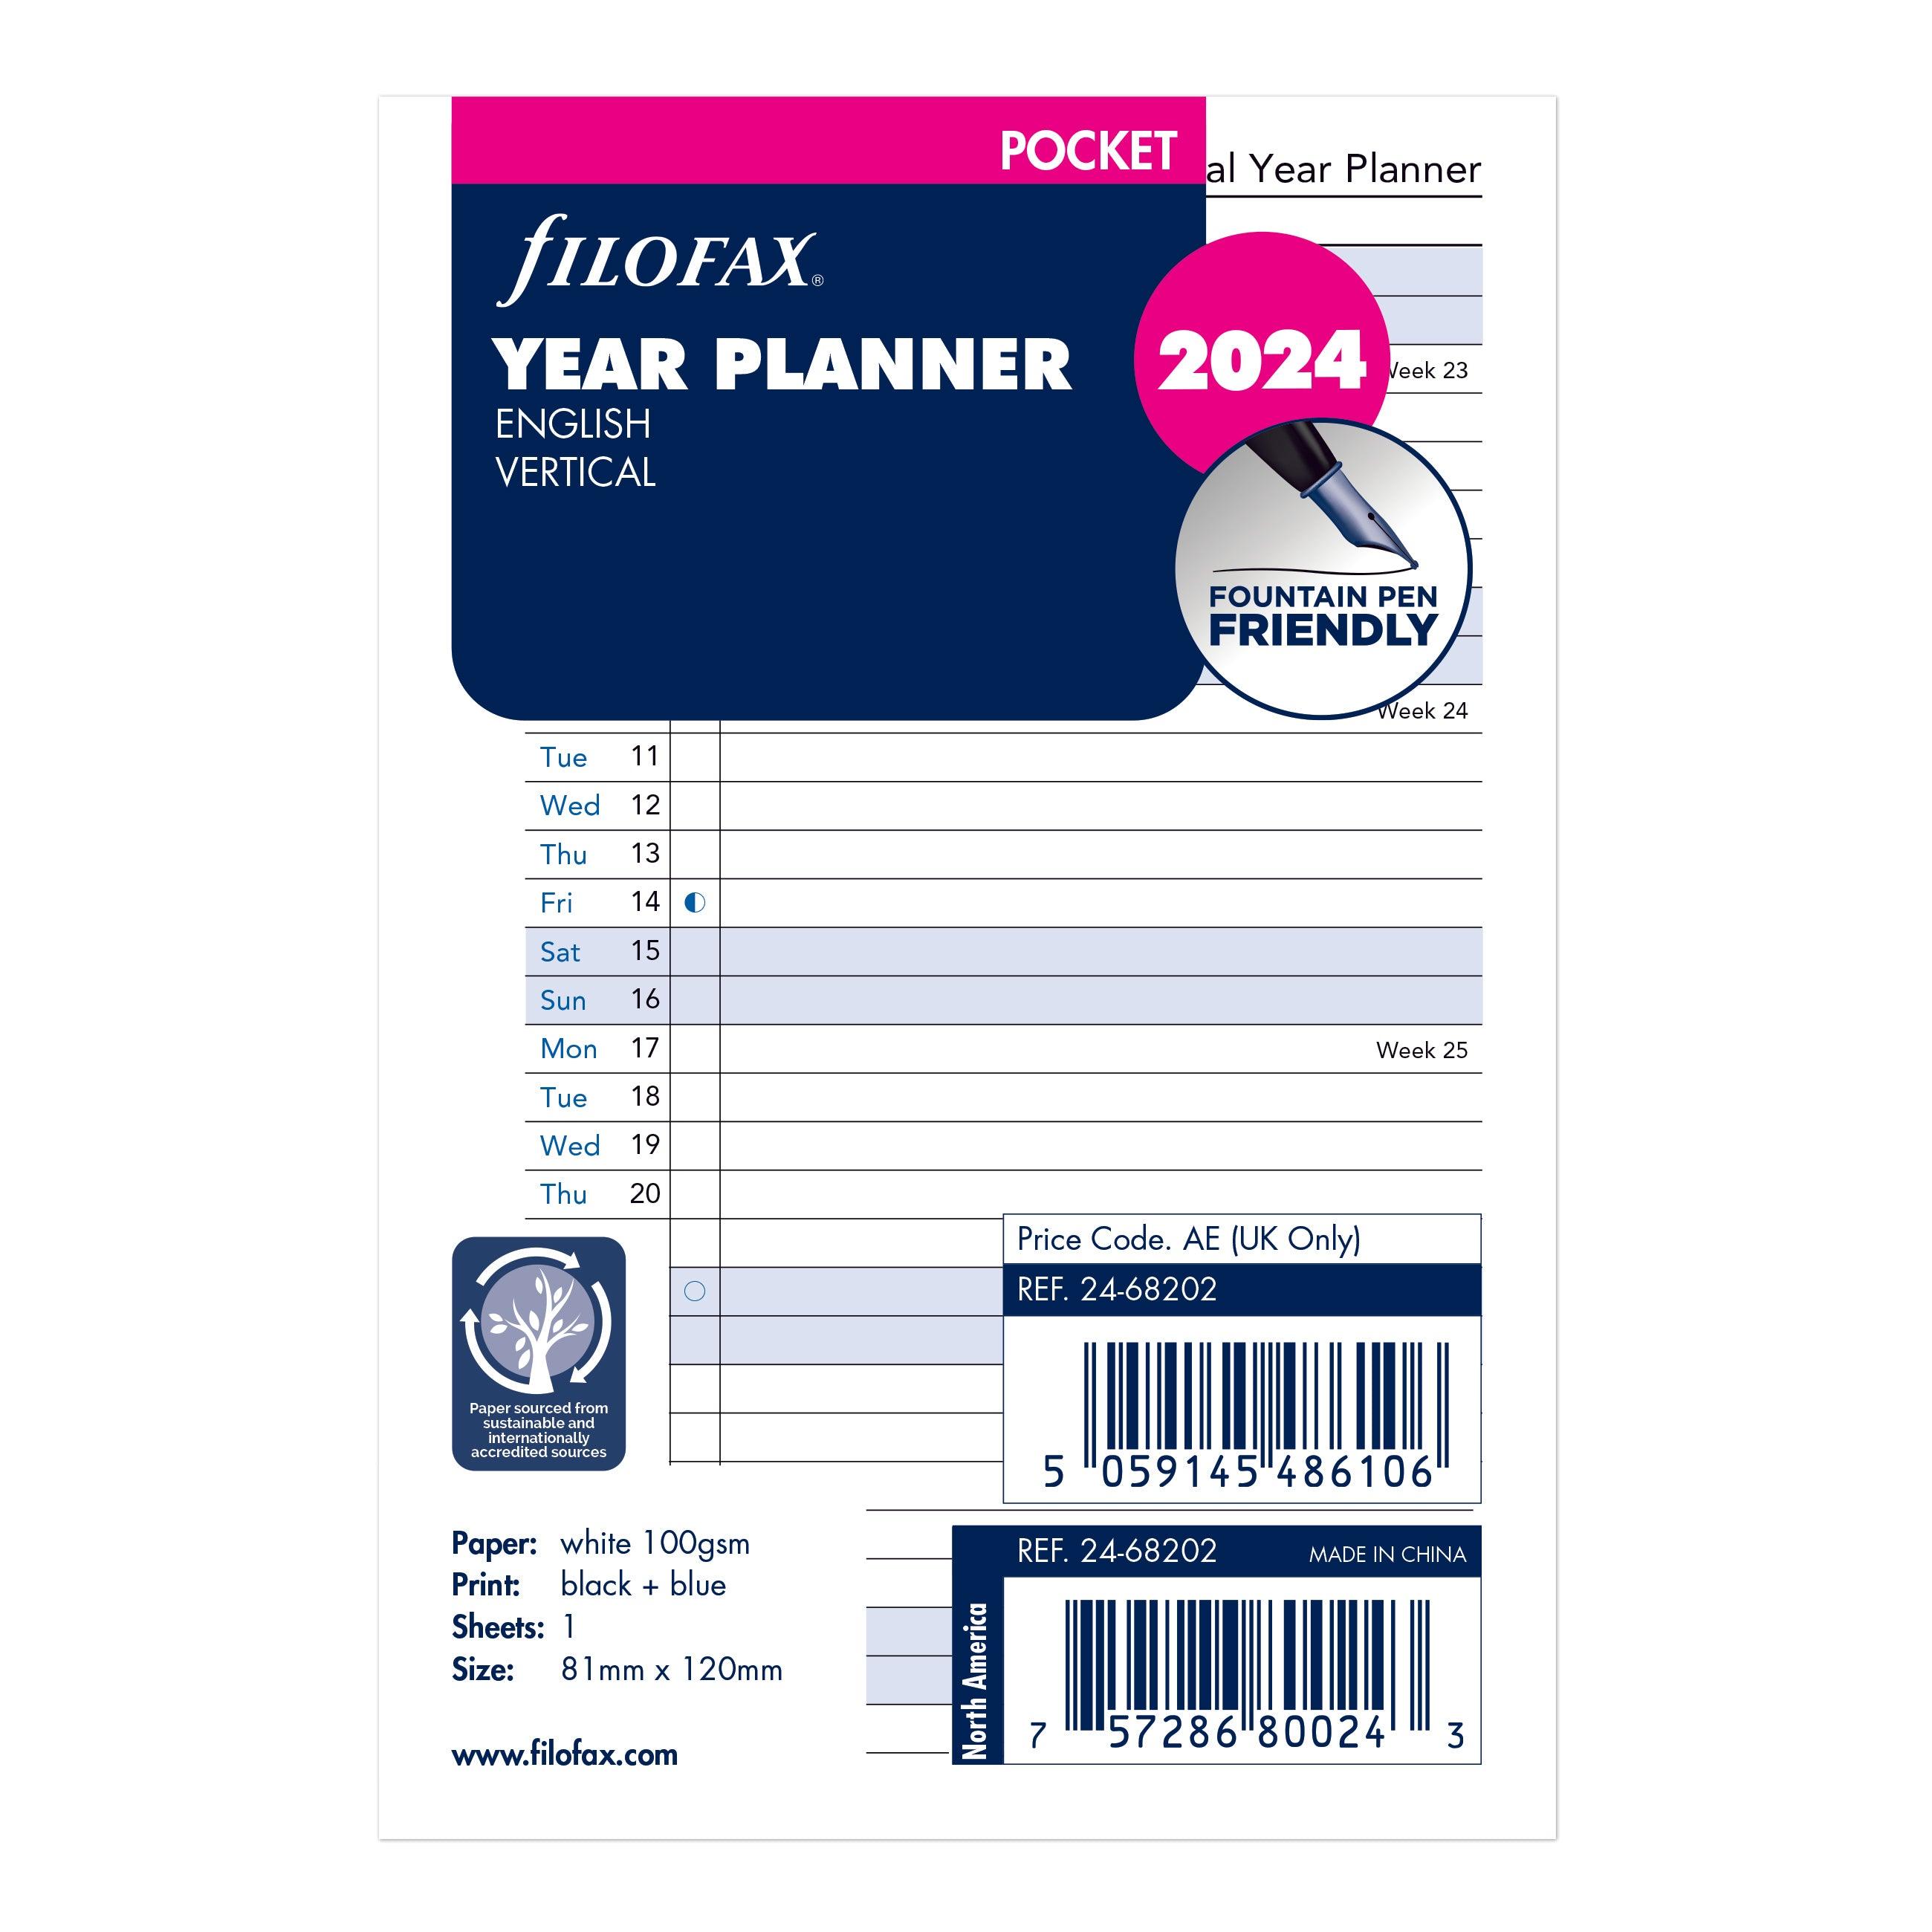 Filofax Pocket Vertical Year Planner 2024 - Laywine's